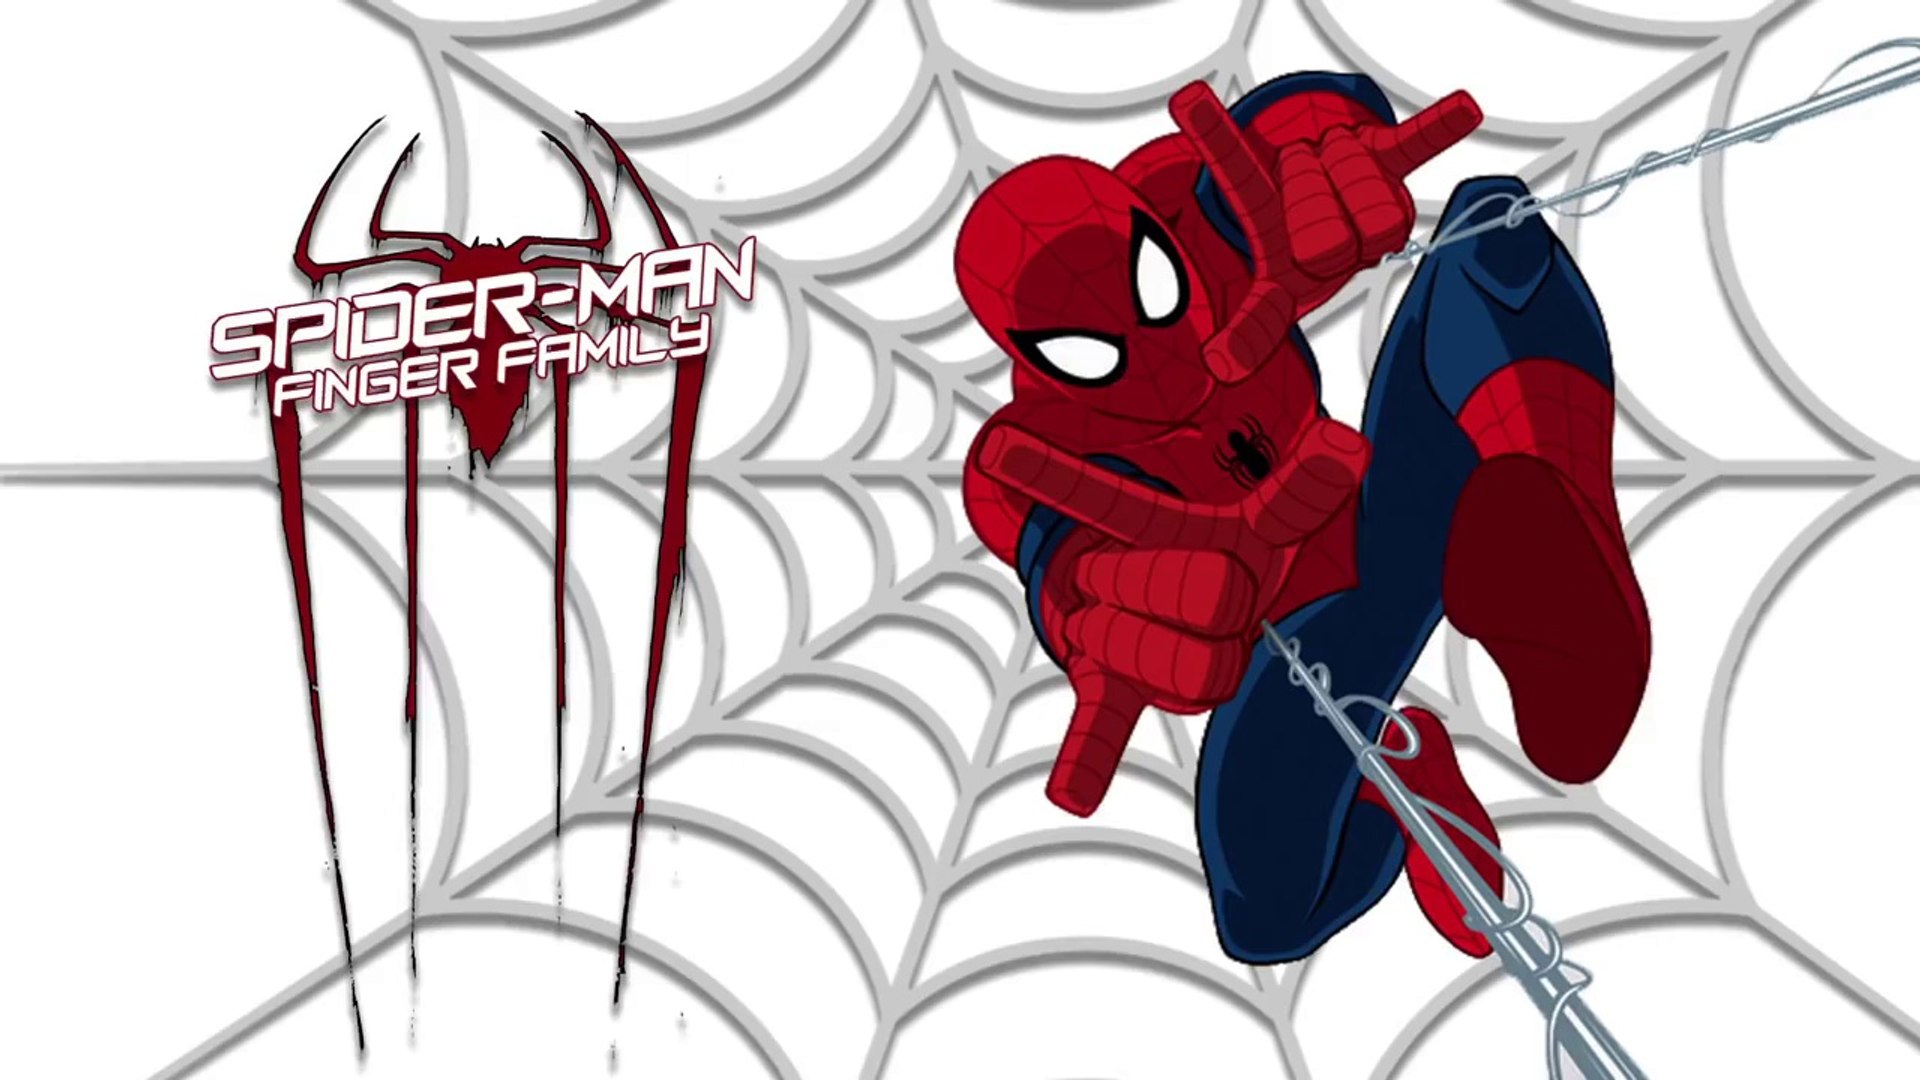 Finger Family Spiderman | Spider Man Finger Family Songs, Kids Songs  Popular Nursery Rhymes - Video Dailymotion